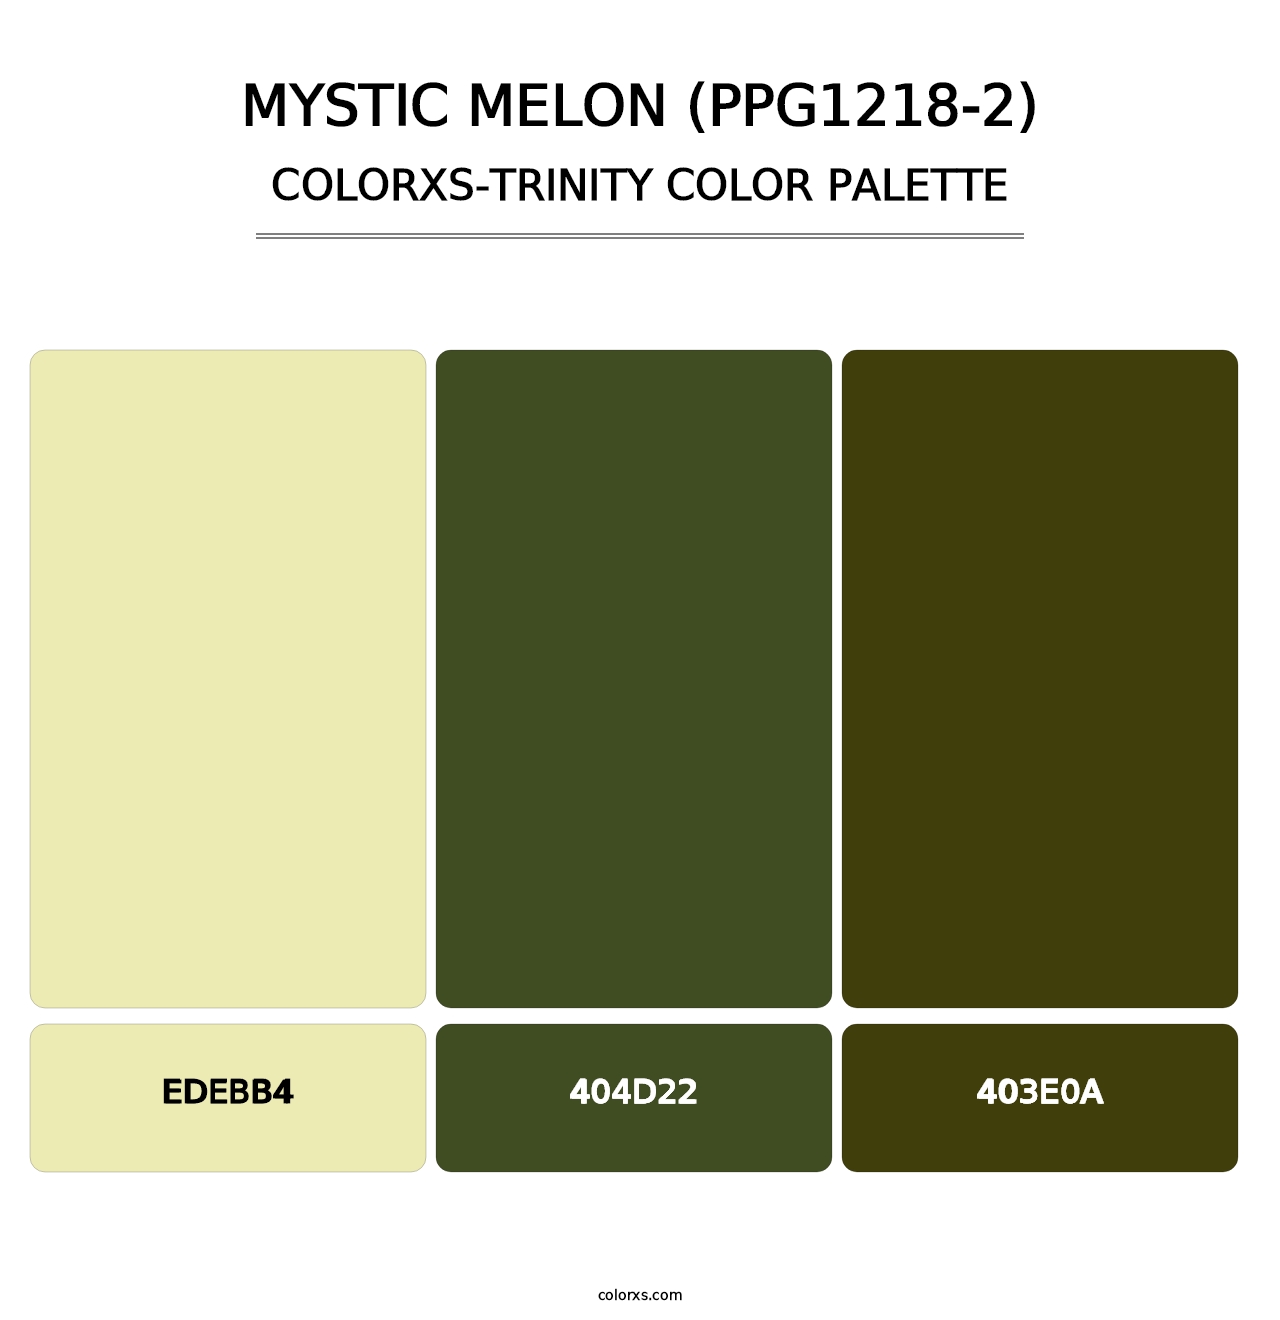 Mystic Melon (PPG1218-2) - Colorxs Trinity Palette